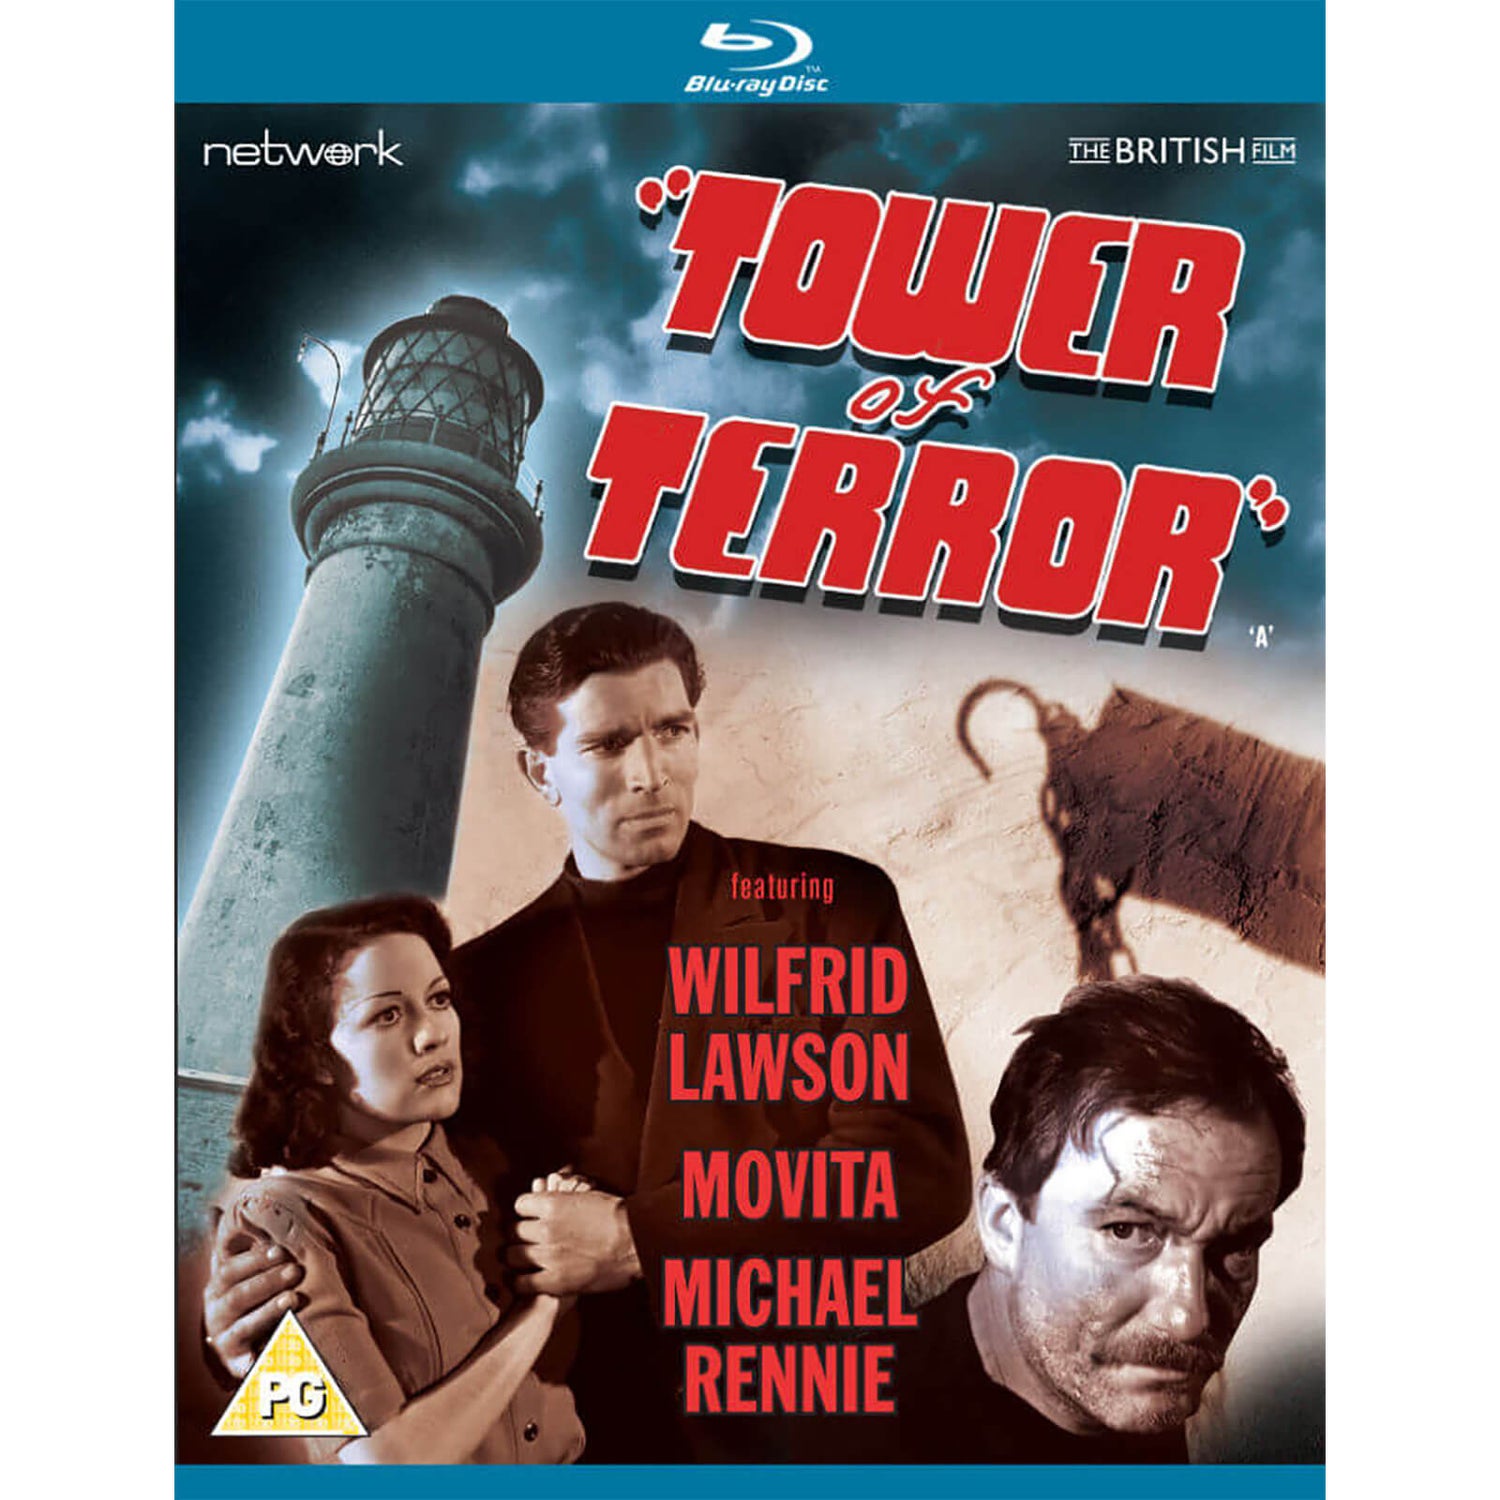 Tower Of Terror Blu-ray